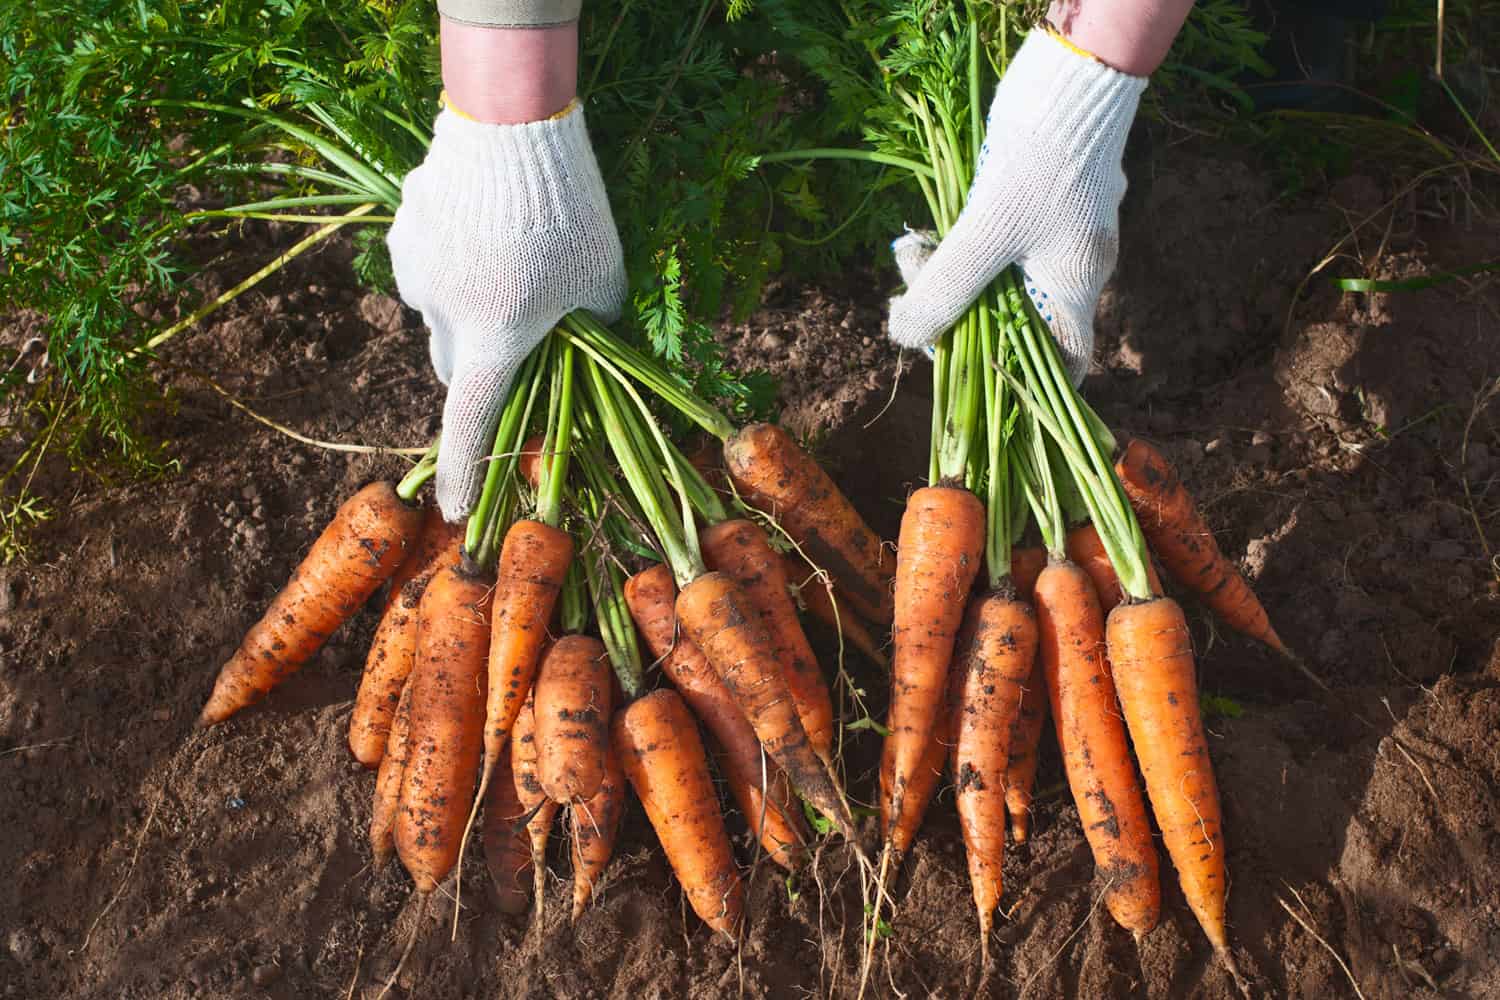 Harvesting carrots in the garden